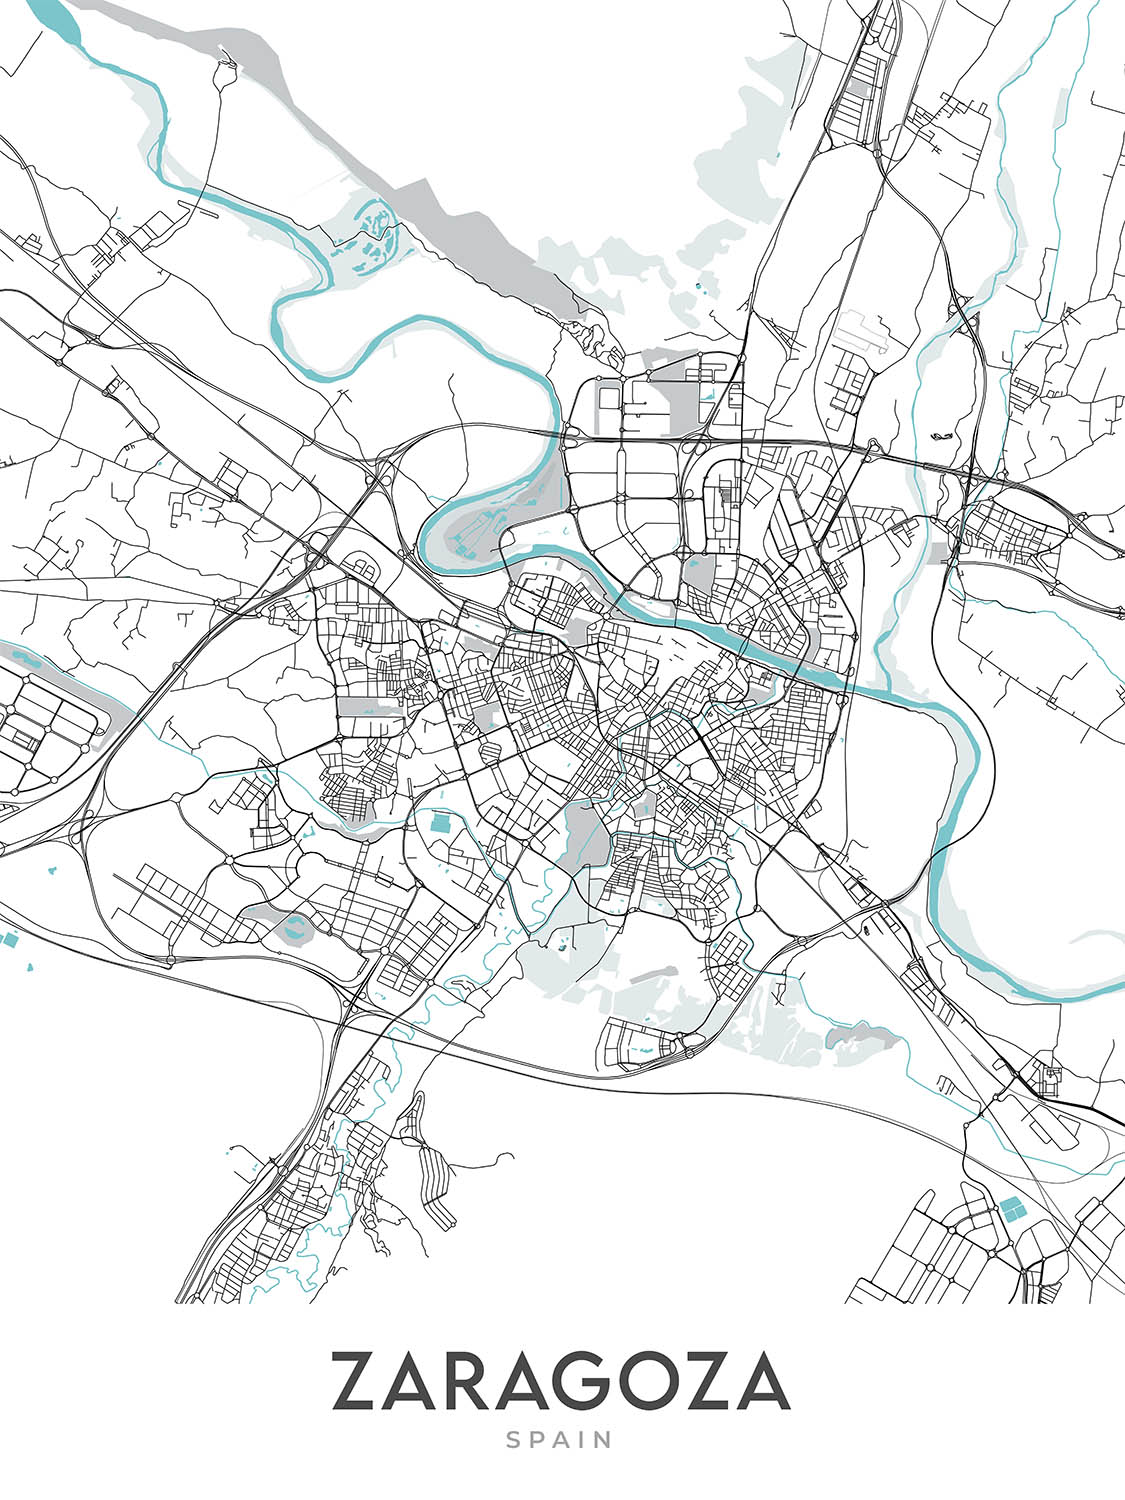 Moderner Stadtplan von Saragossa, Spanien: Basilika, Kathedrale, Palast, Fluss, Universität